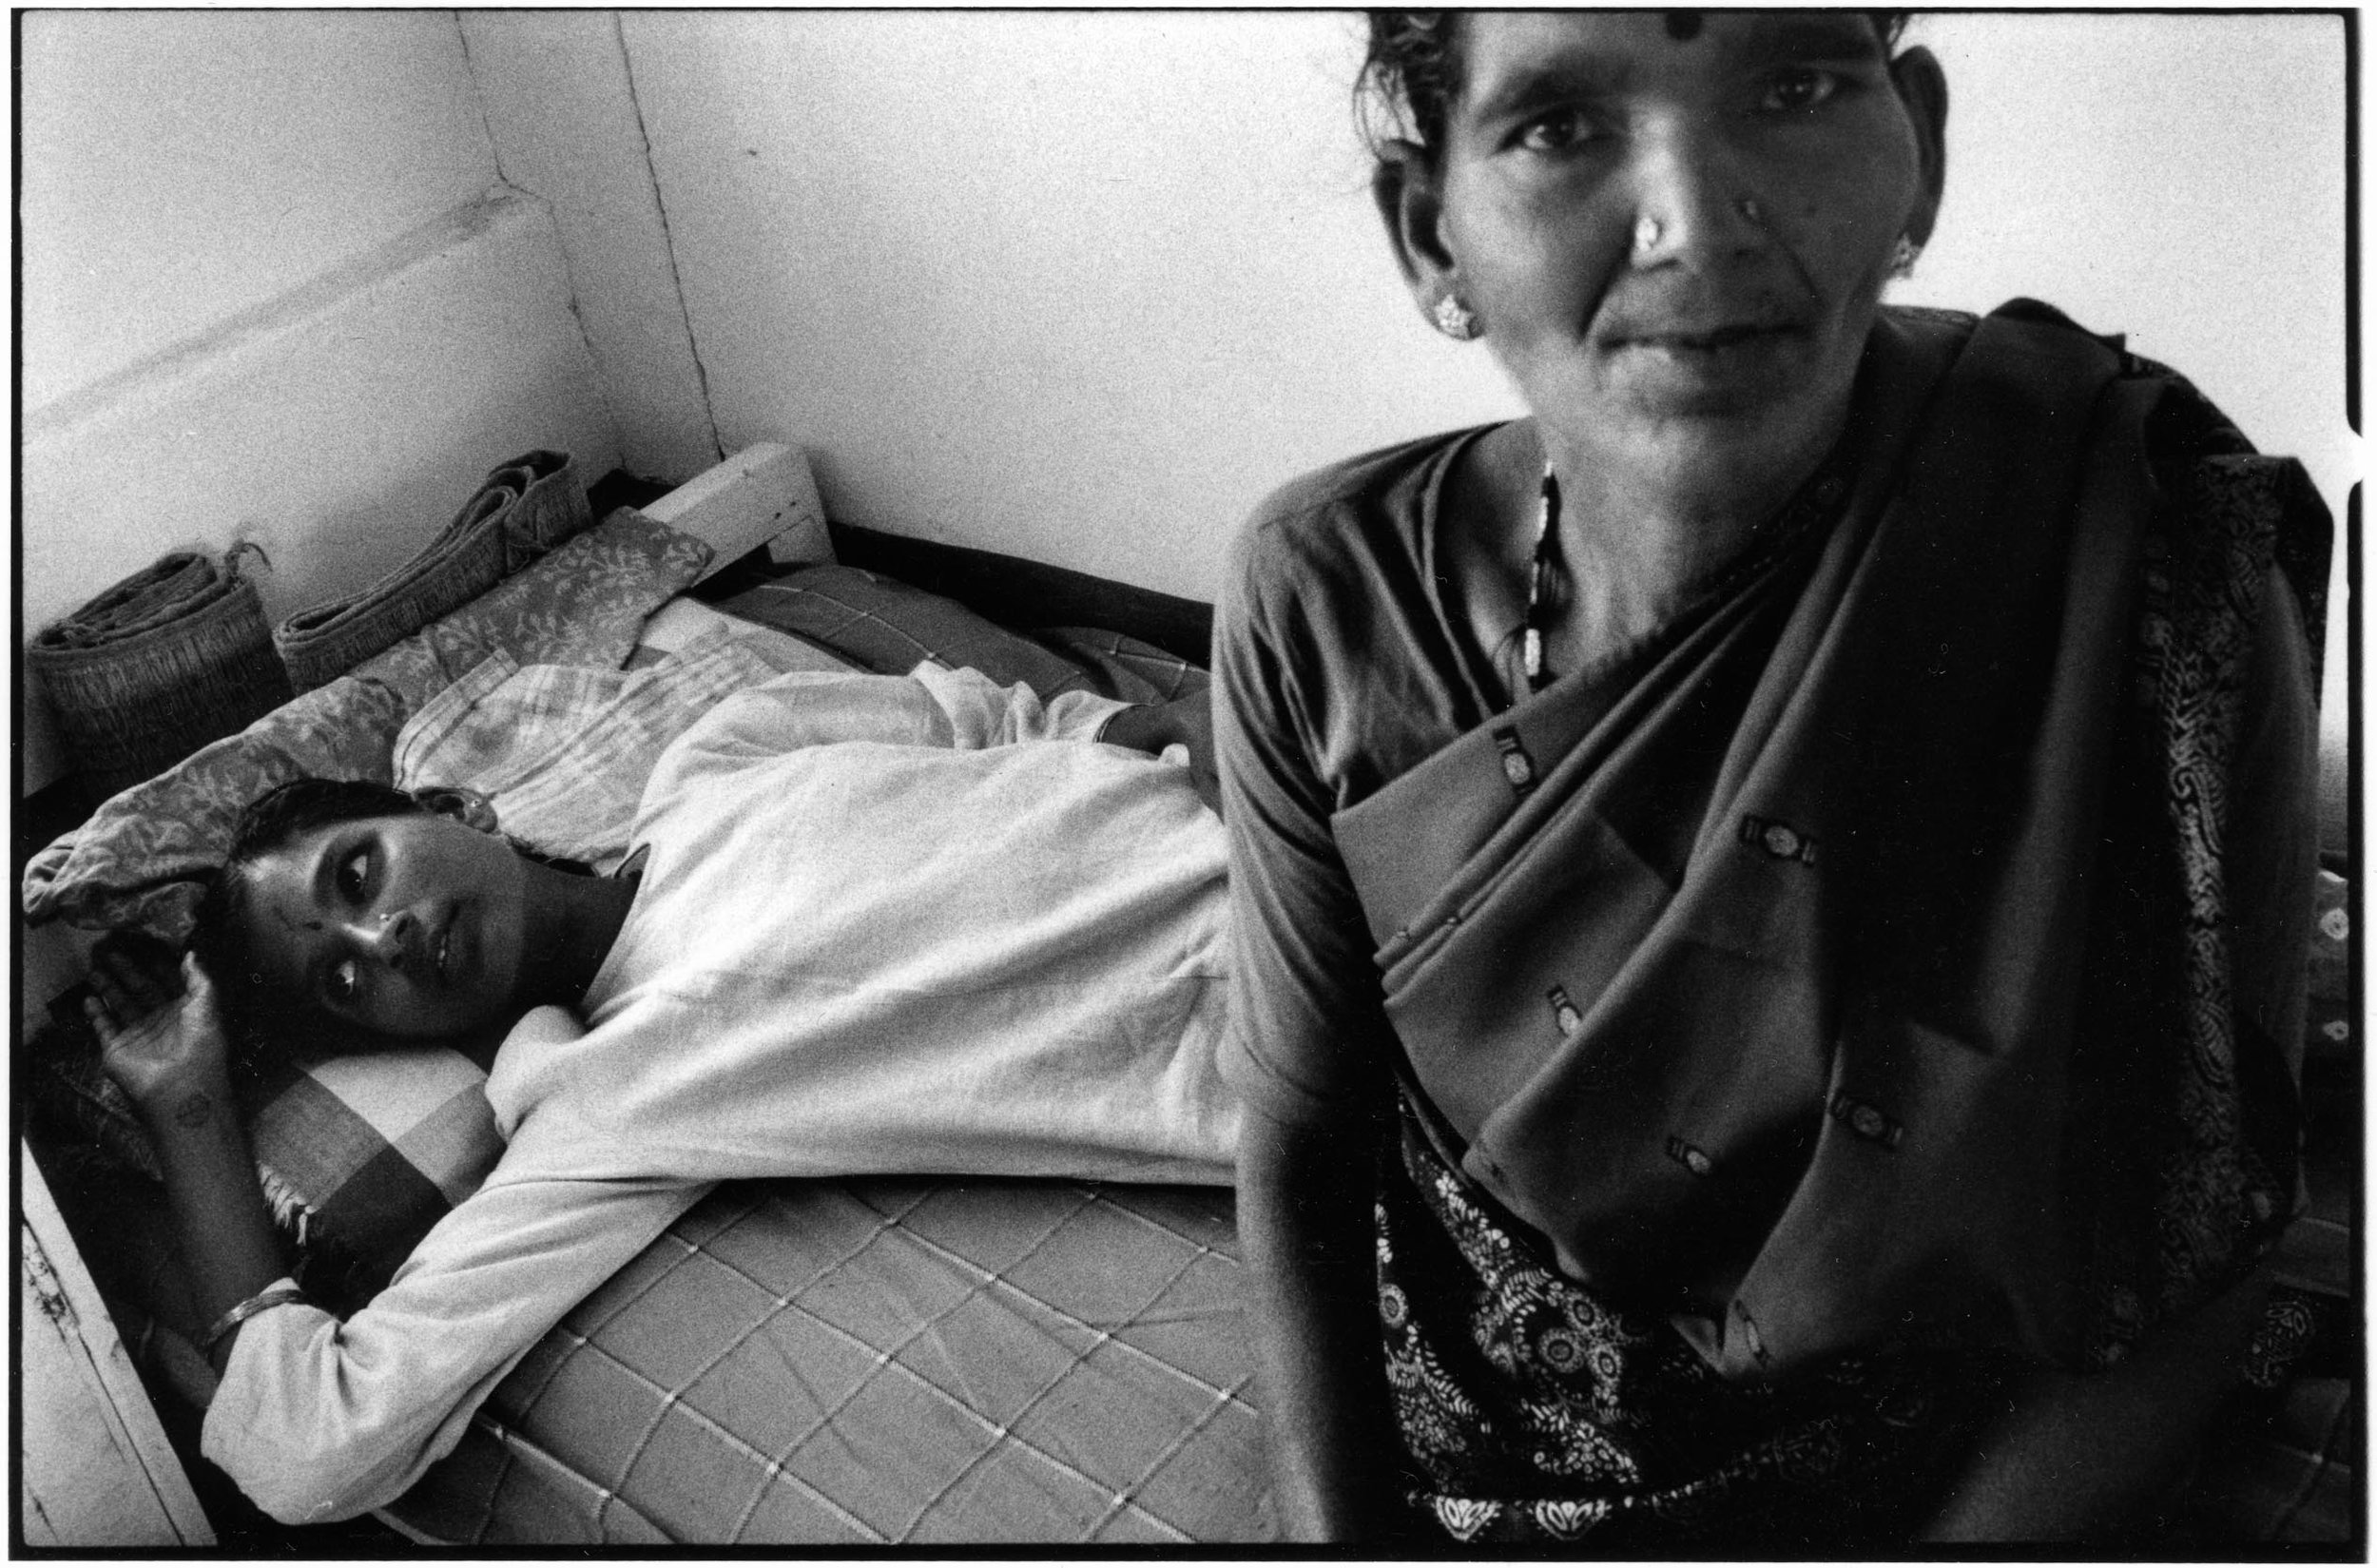 12_freelance photographer_Srinivas Kuruganti_New Delhi_HIV AIDS India.jpg